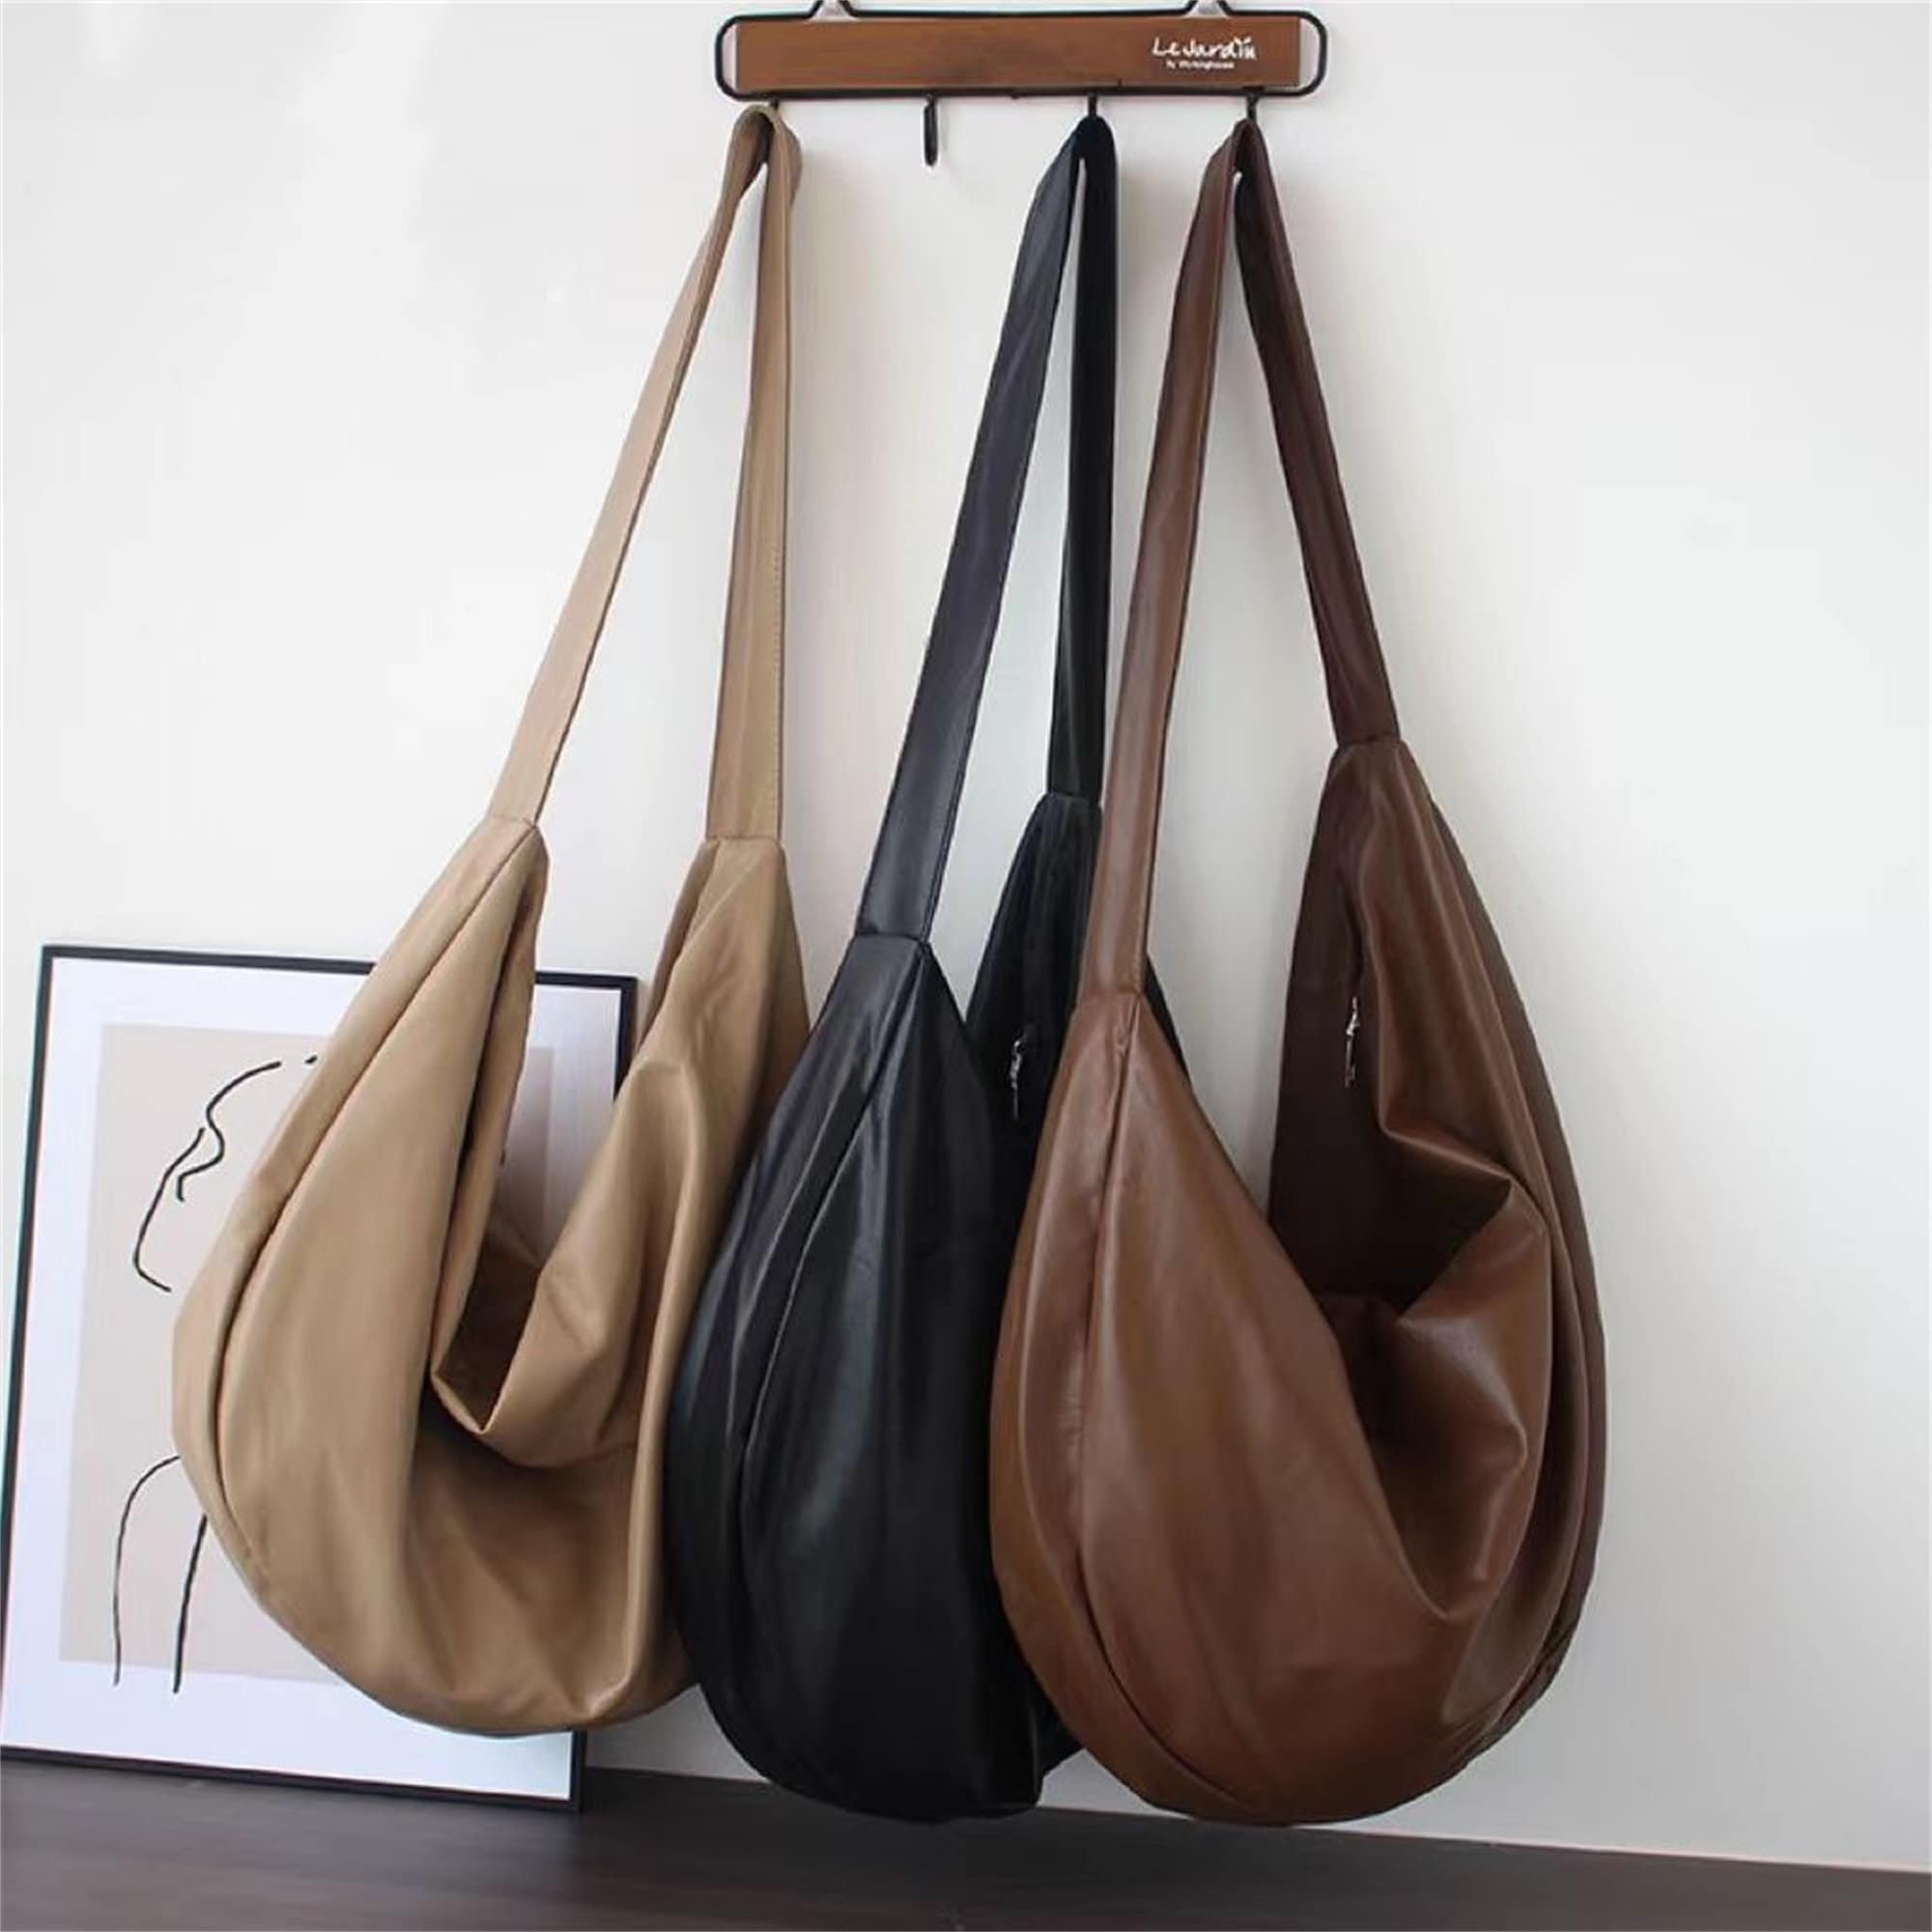 FEOFFS Woven Leather Hobe Dumpling Bag Dinner Handbag for Women Purse Hobo Bag Knotted Woven Clutch Bag